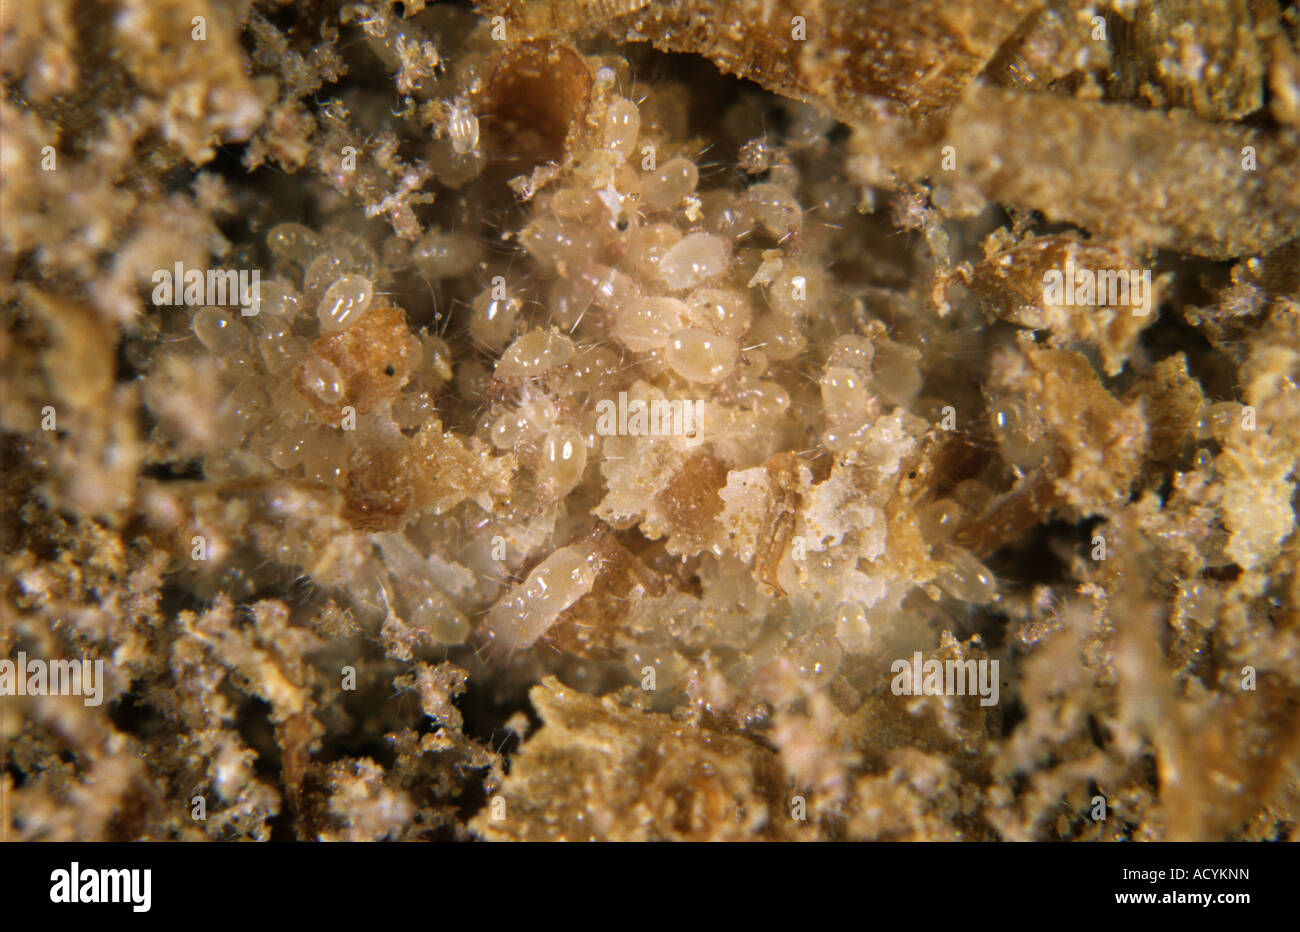 Grain mites infesting fresh bread in kitchen storage several possible species Stock Photo